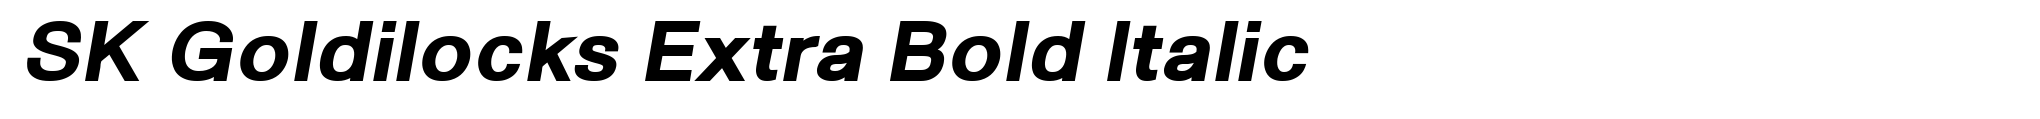 SK Goldilocks Extra Bold Italic image